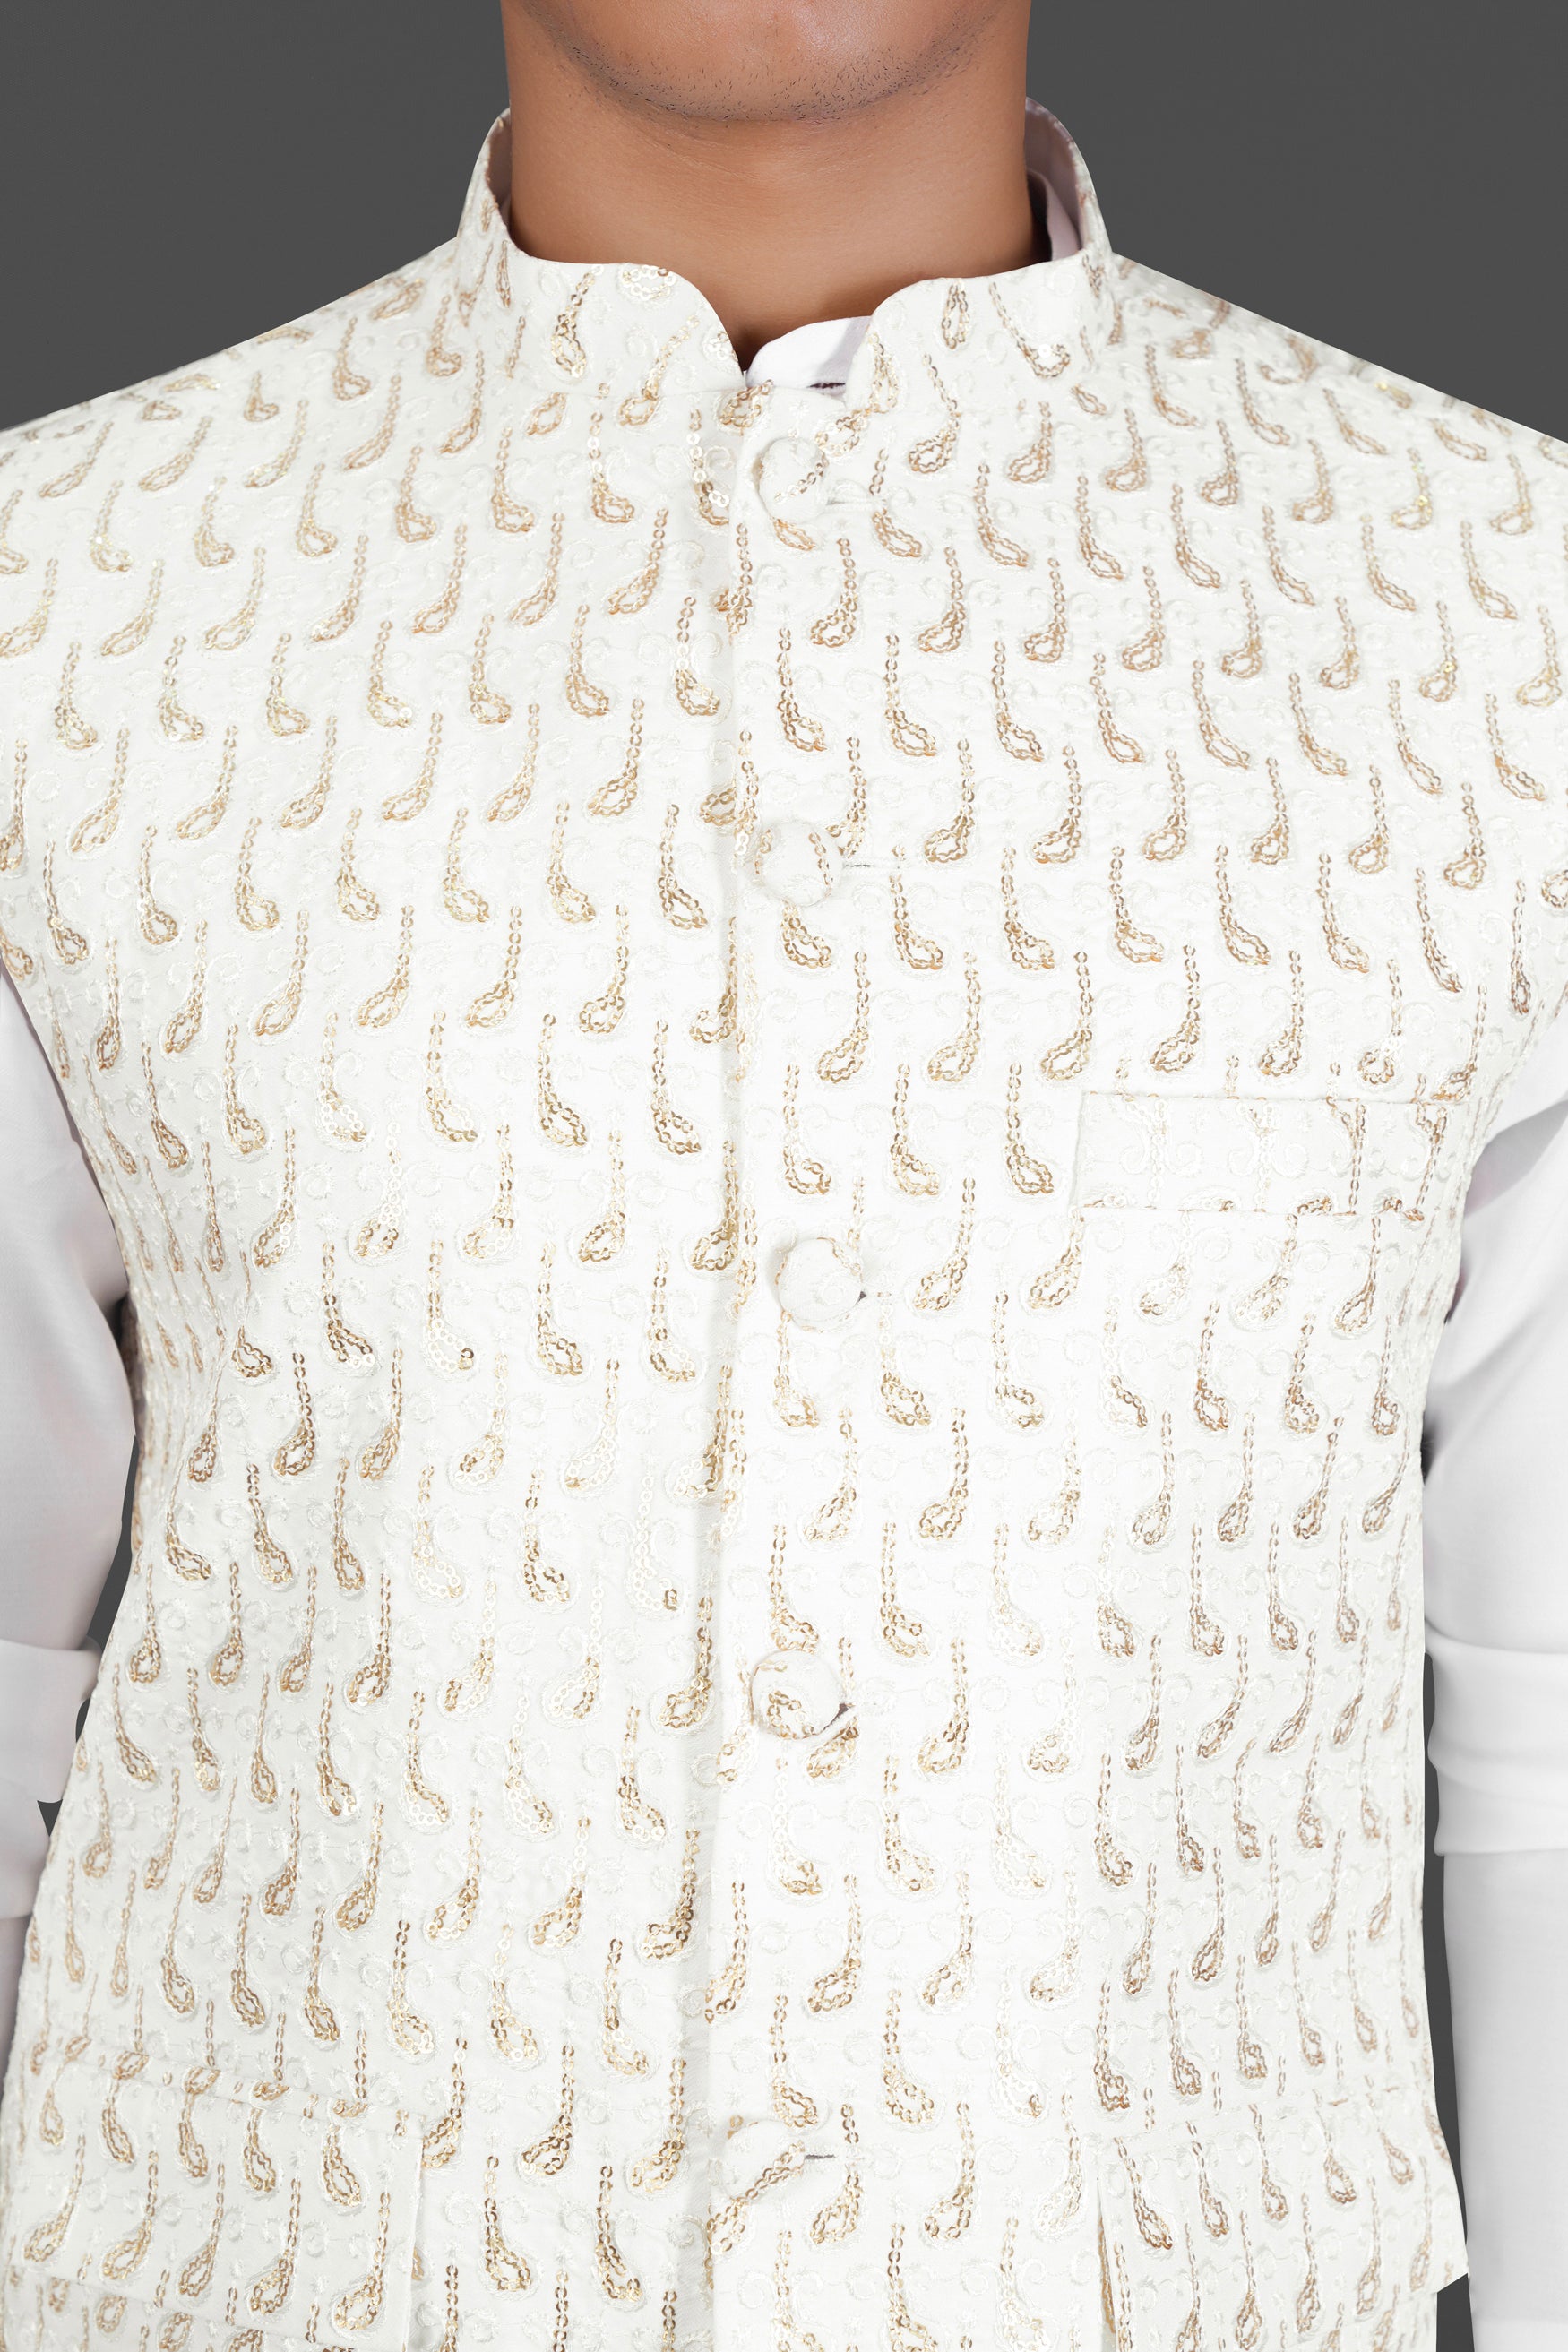 Bright White Leaves Pattern Sequin Embroidered Designer Viscose Nehru Jacket